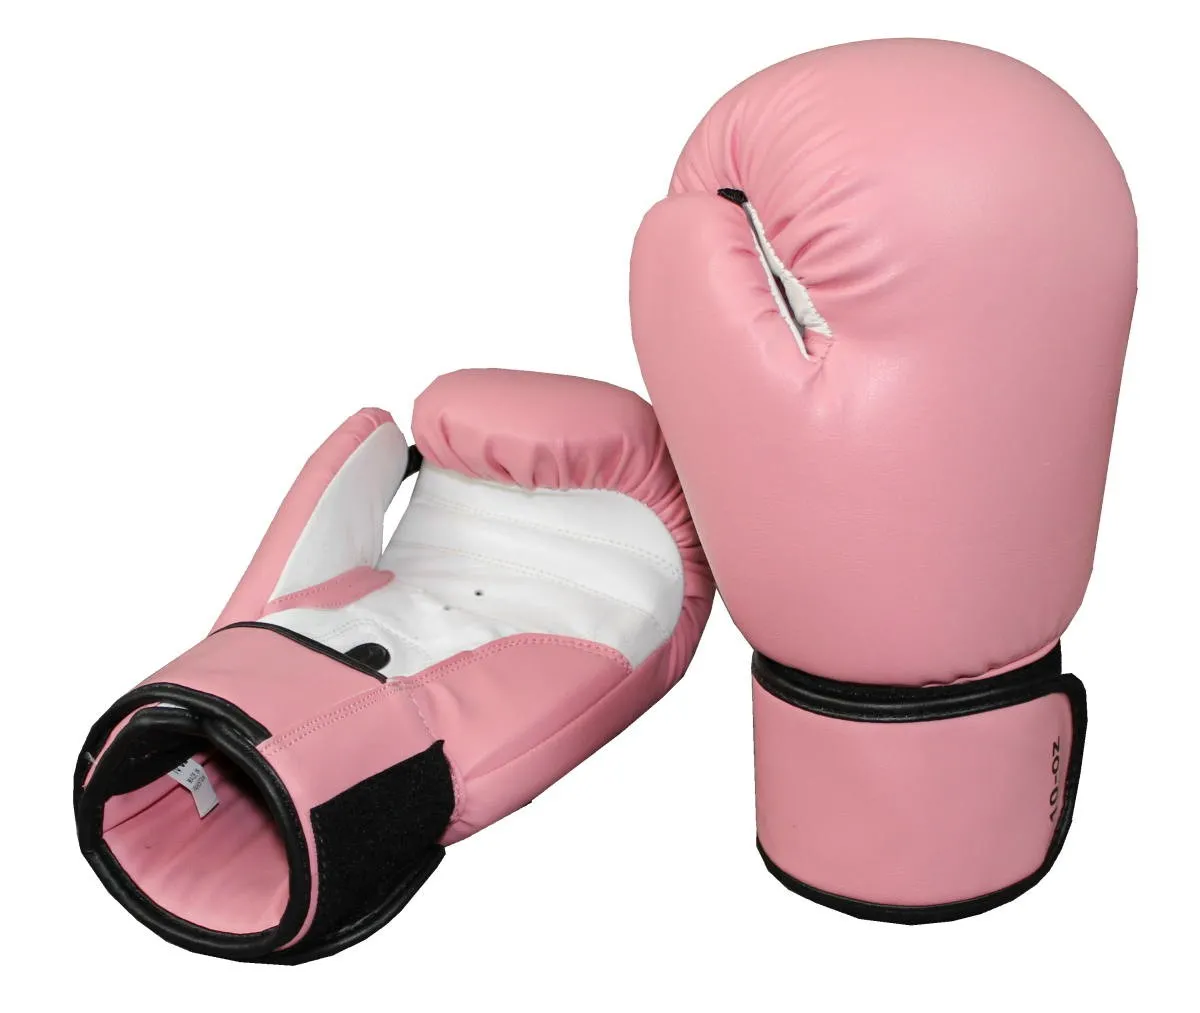 Guantes de boxeo rosa mujer